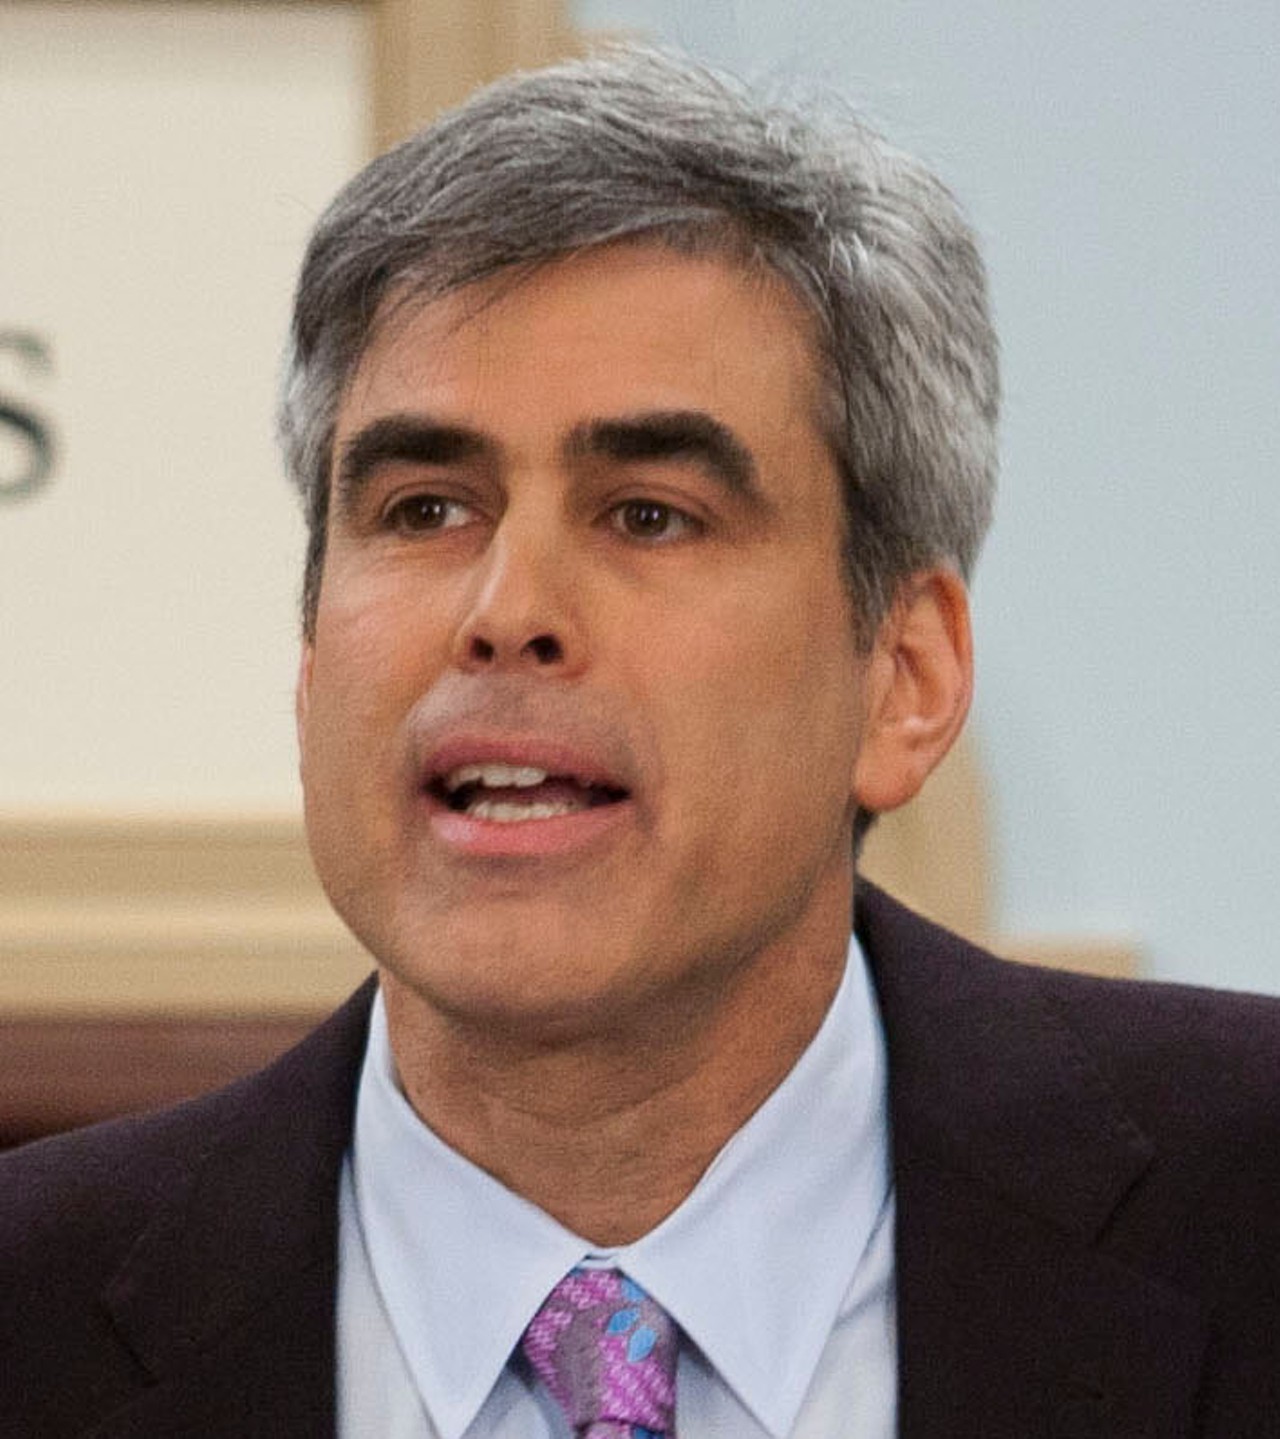 Jonathan Haidt Lecture
Thu, Sept. 20
Photo via Wikipedia